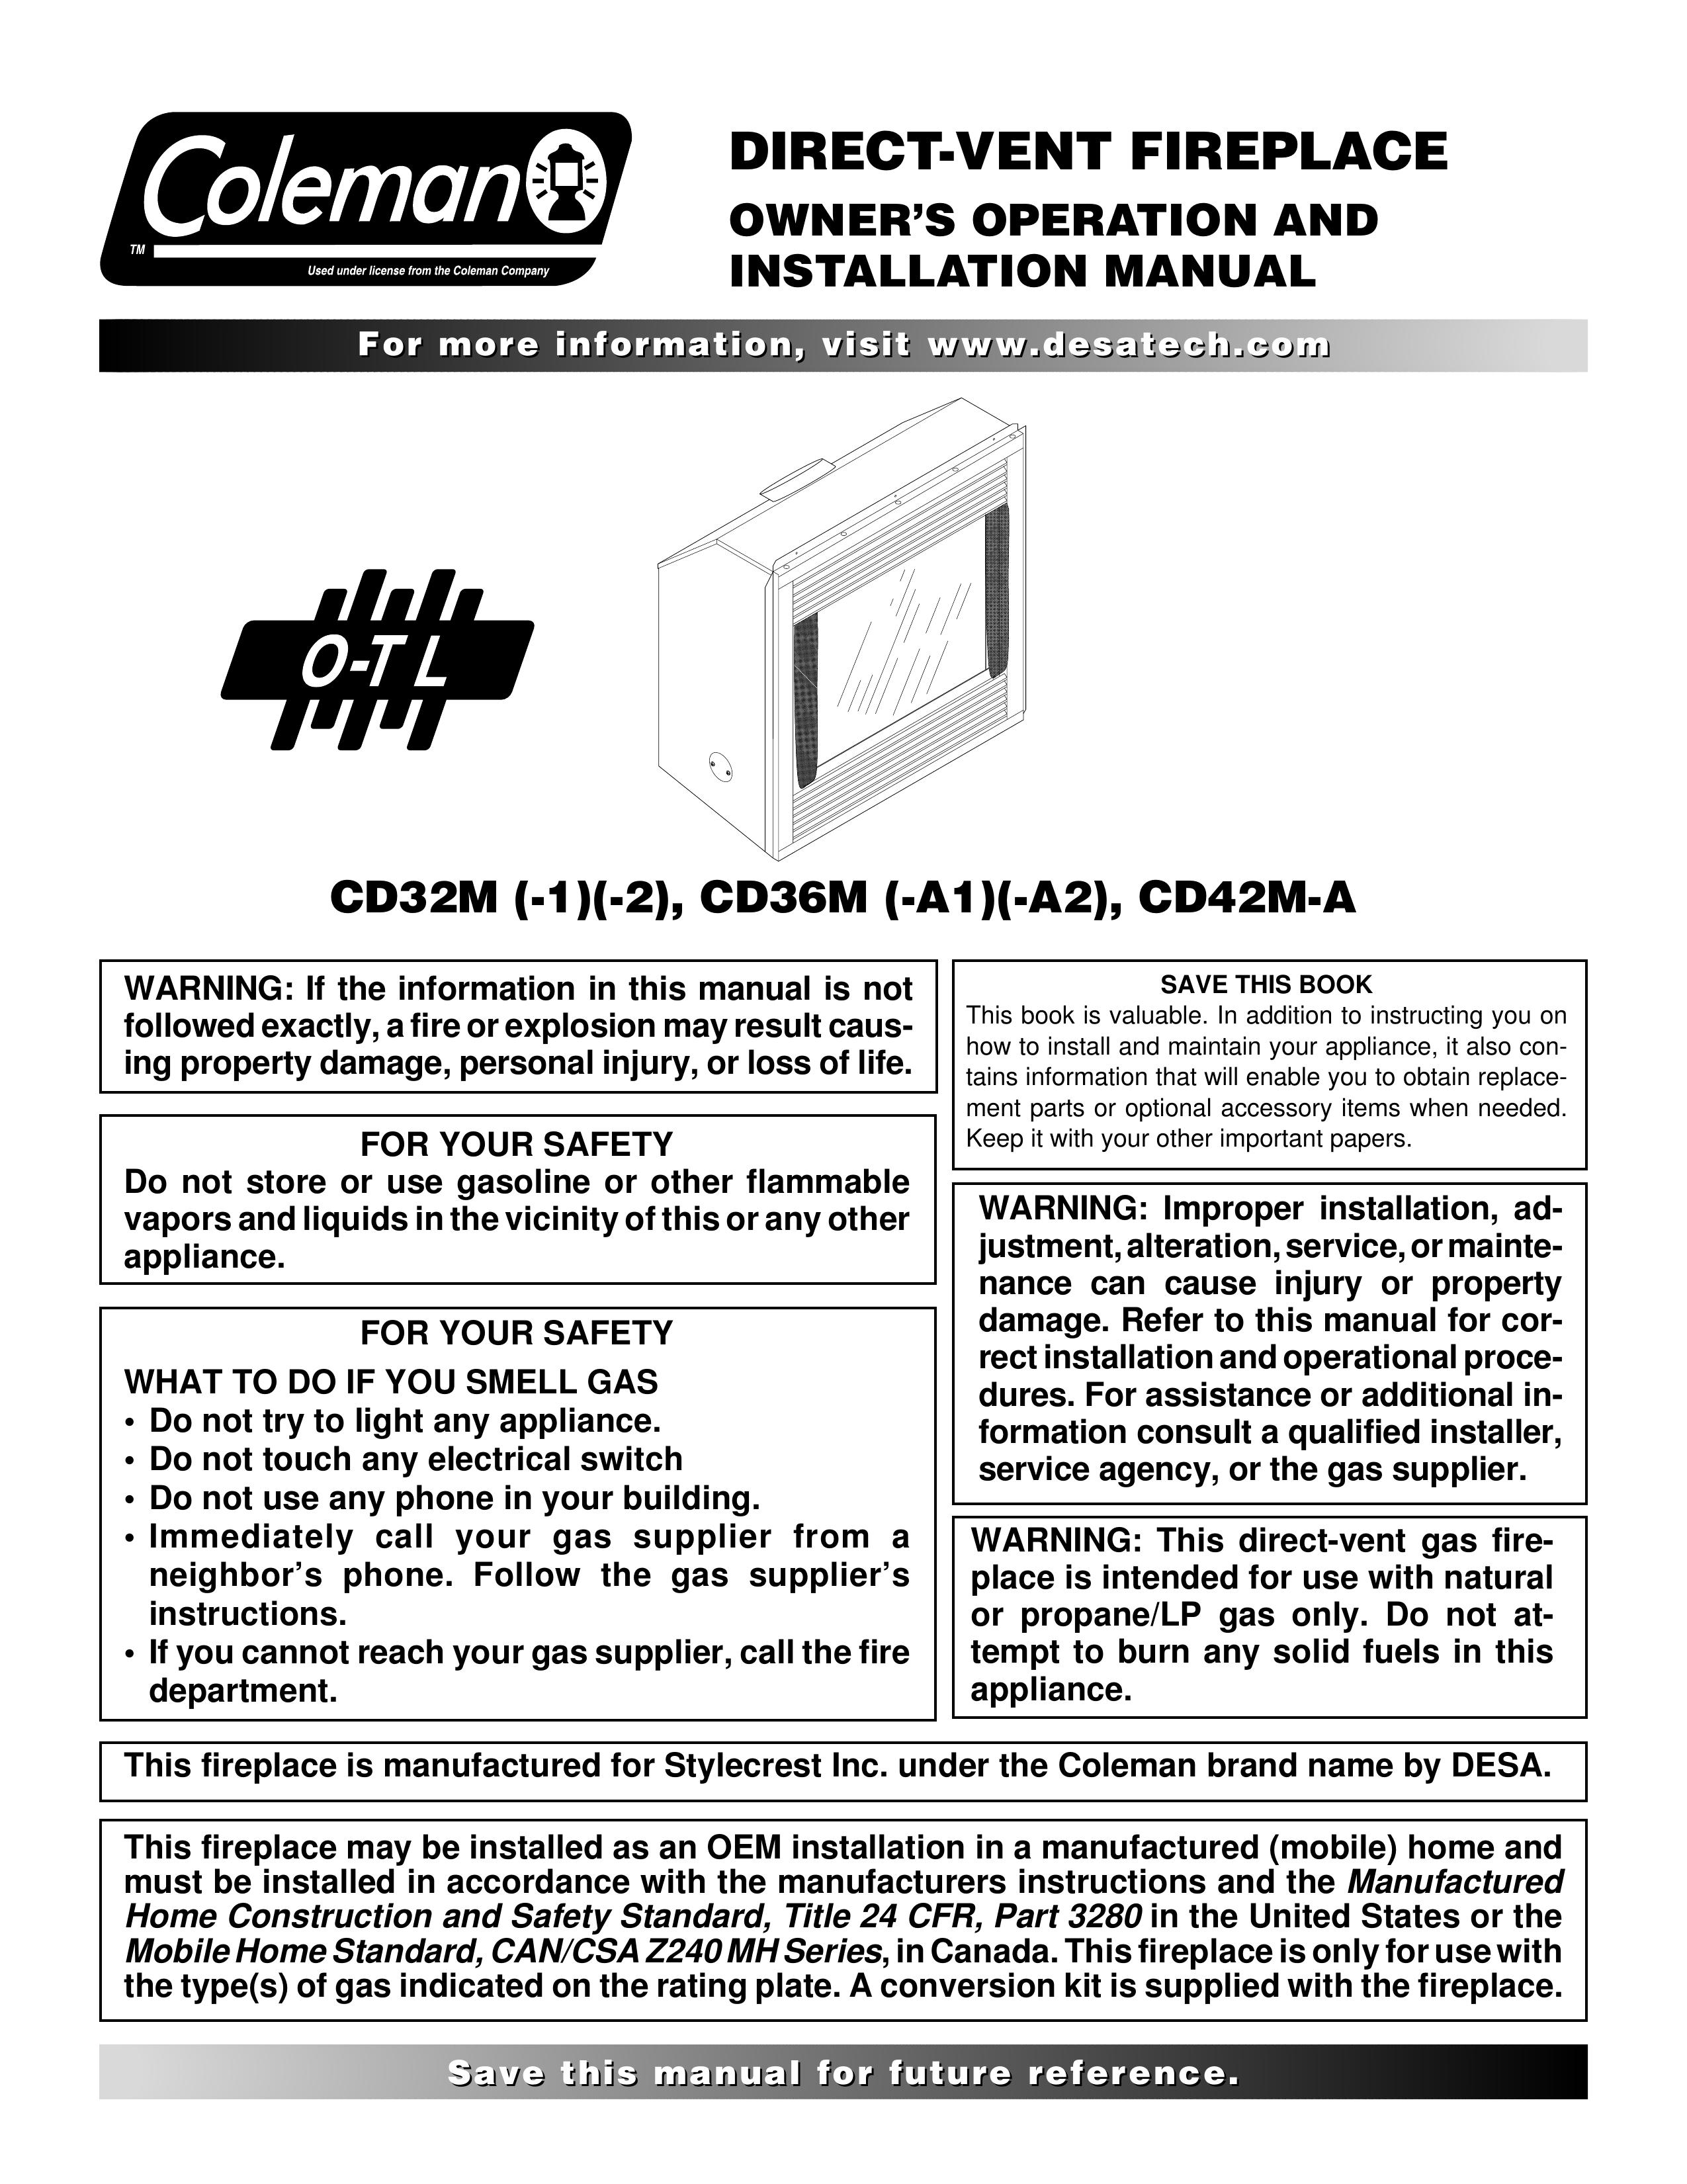 Desa CD42M-A Fire Pit User Manual (Page 1)